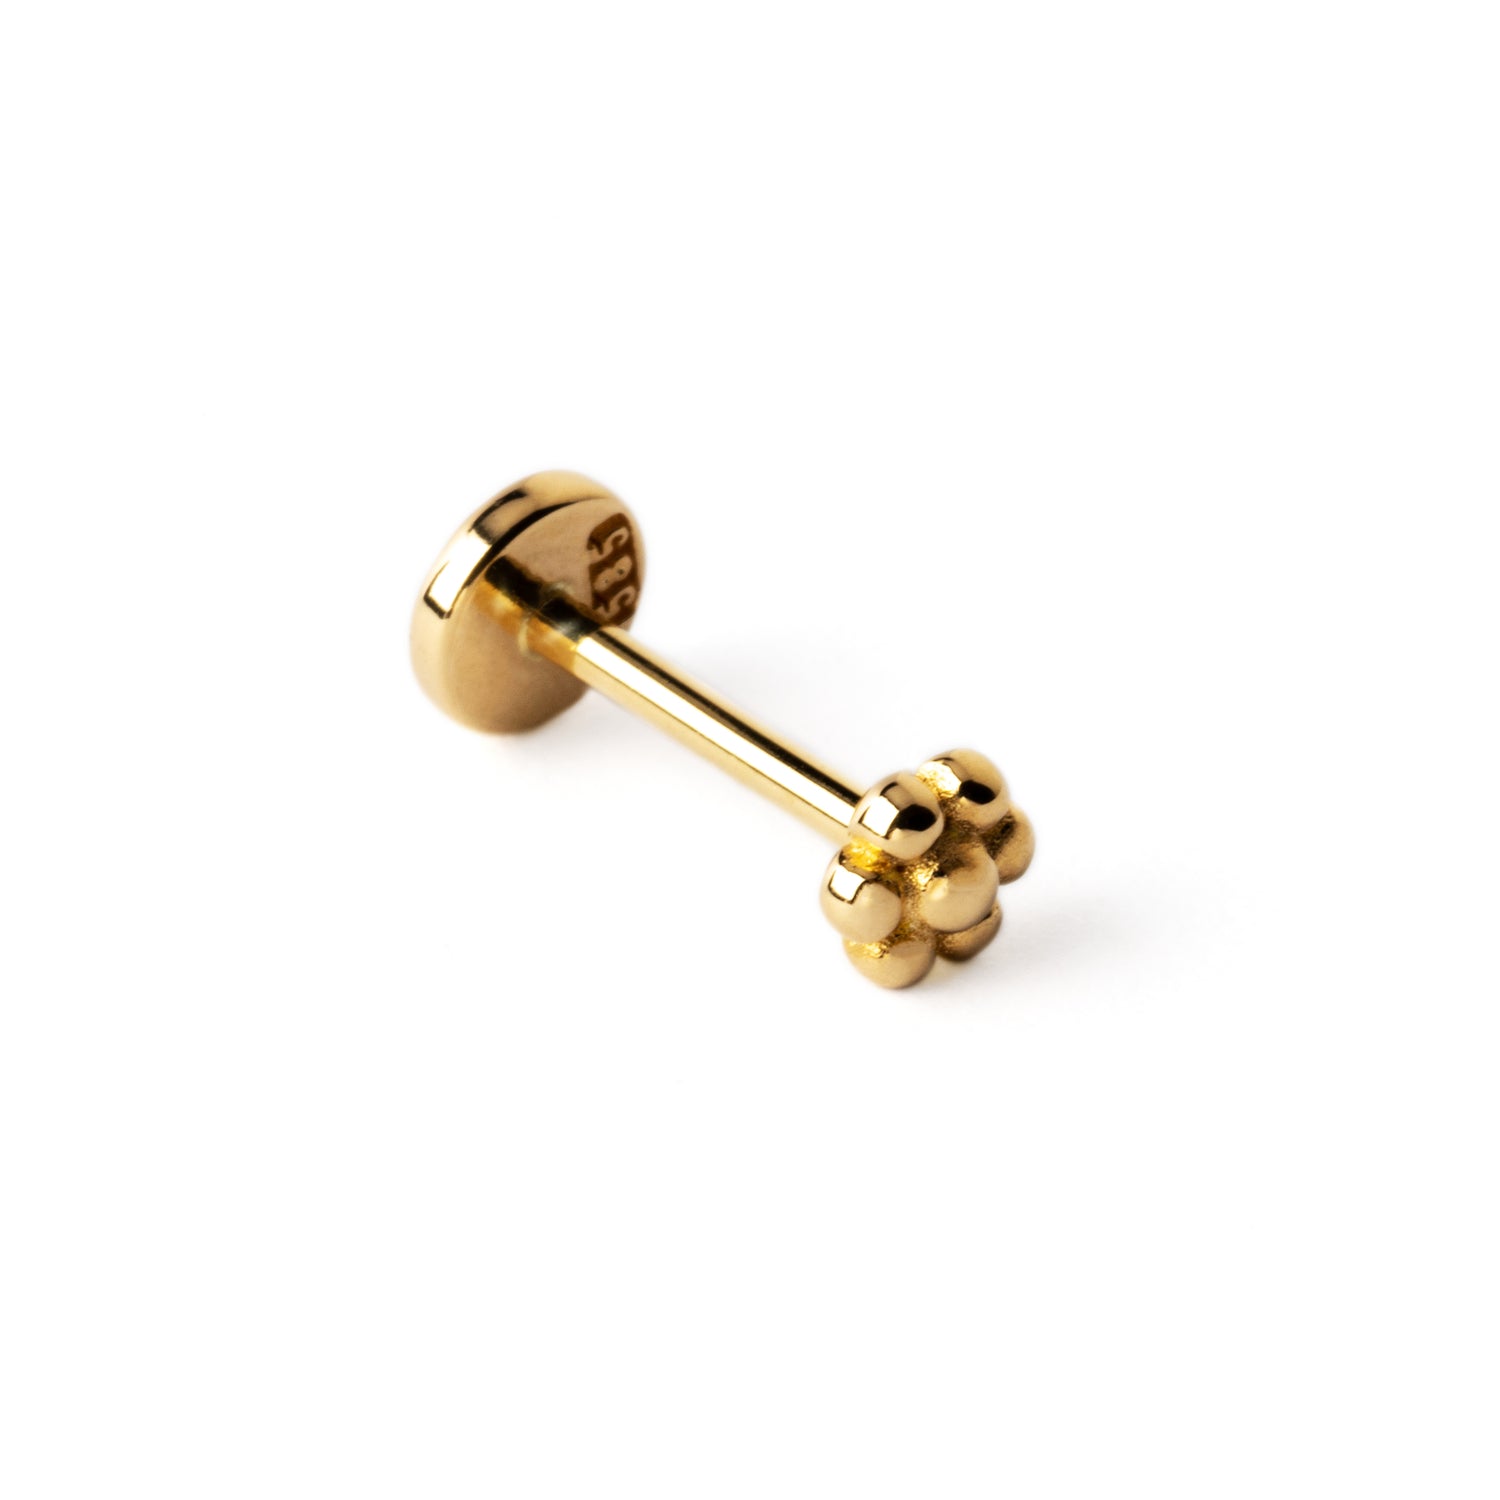 14k Gold internally threaded screw back earring 1.2mm (16g), 8mm, dots flower labret stud left side view